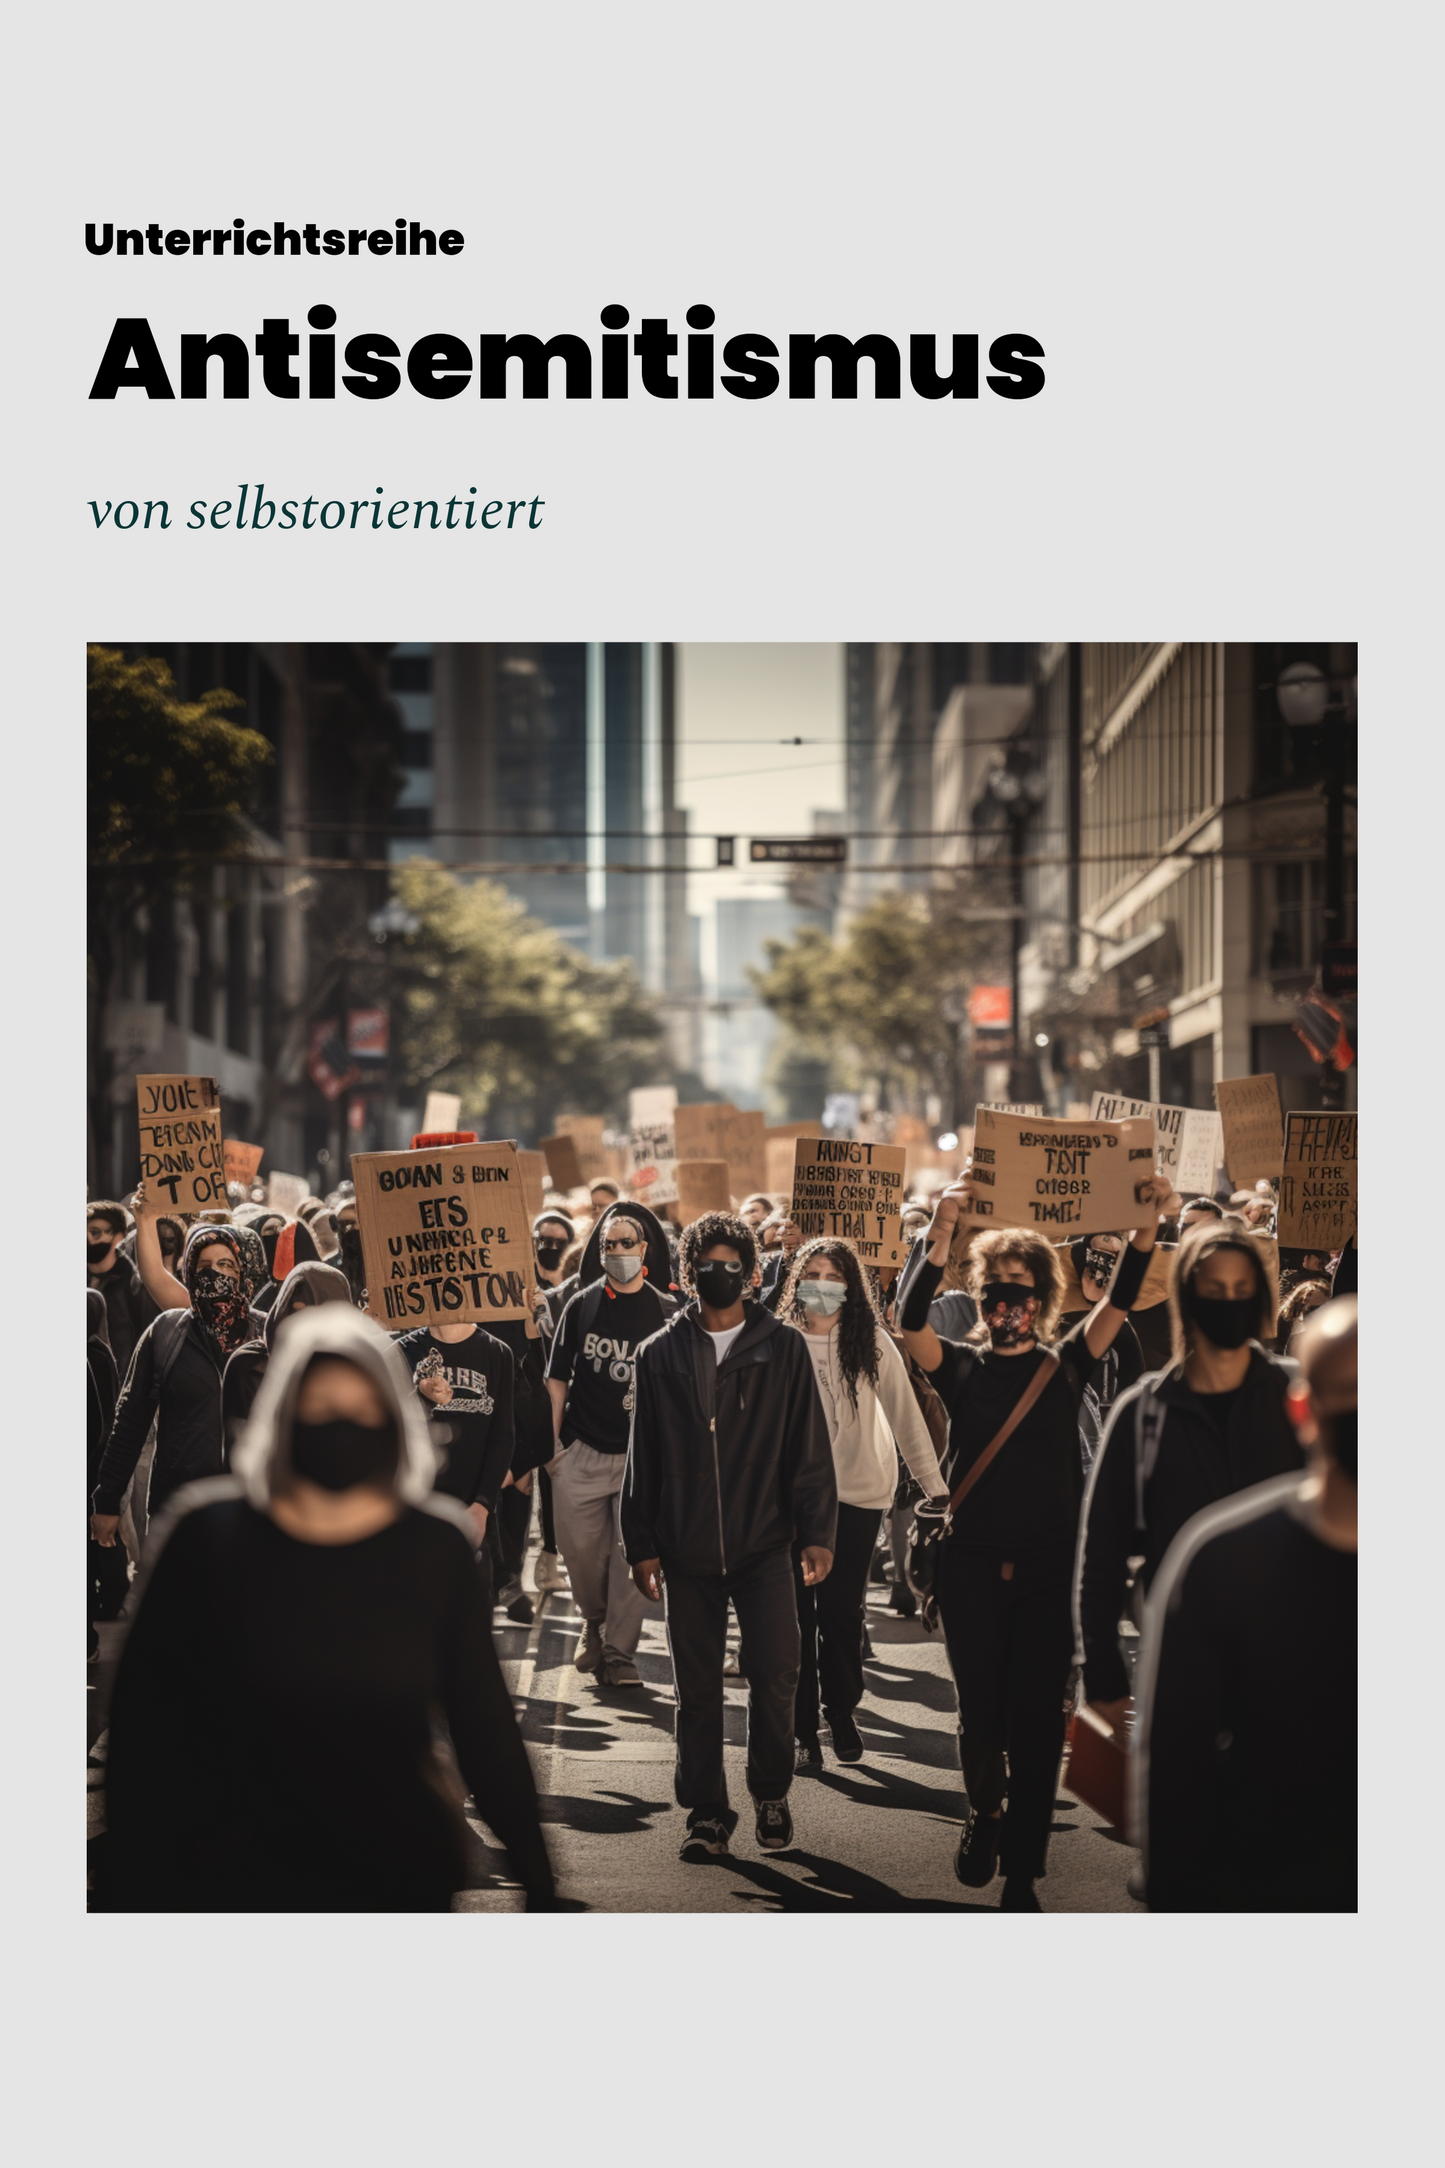 What is anti-Semitism? - Israel-Palestine conflict